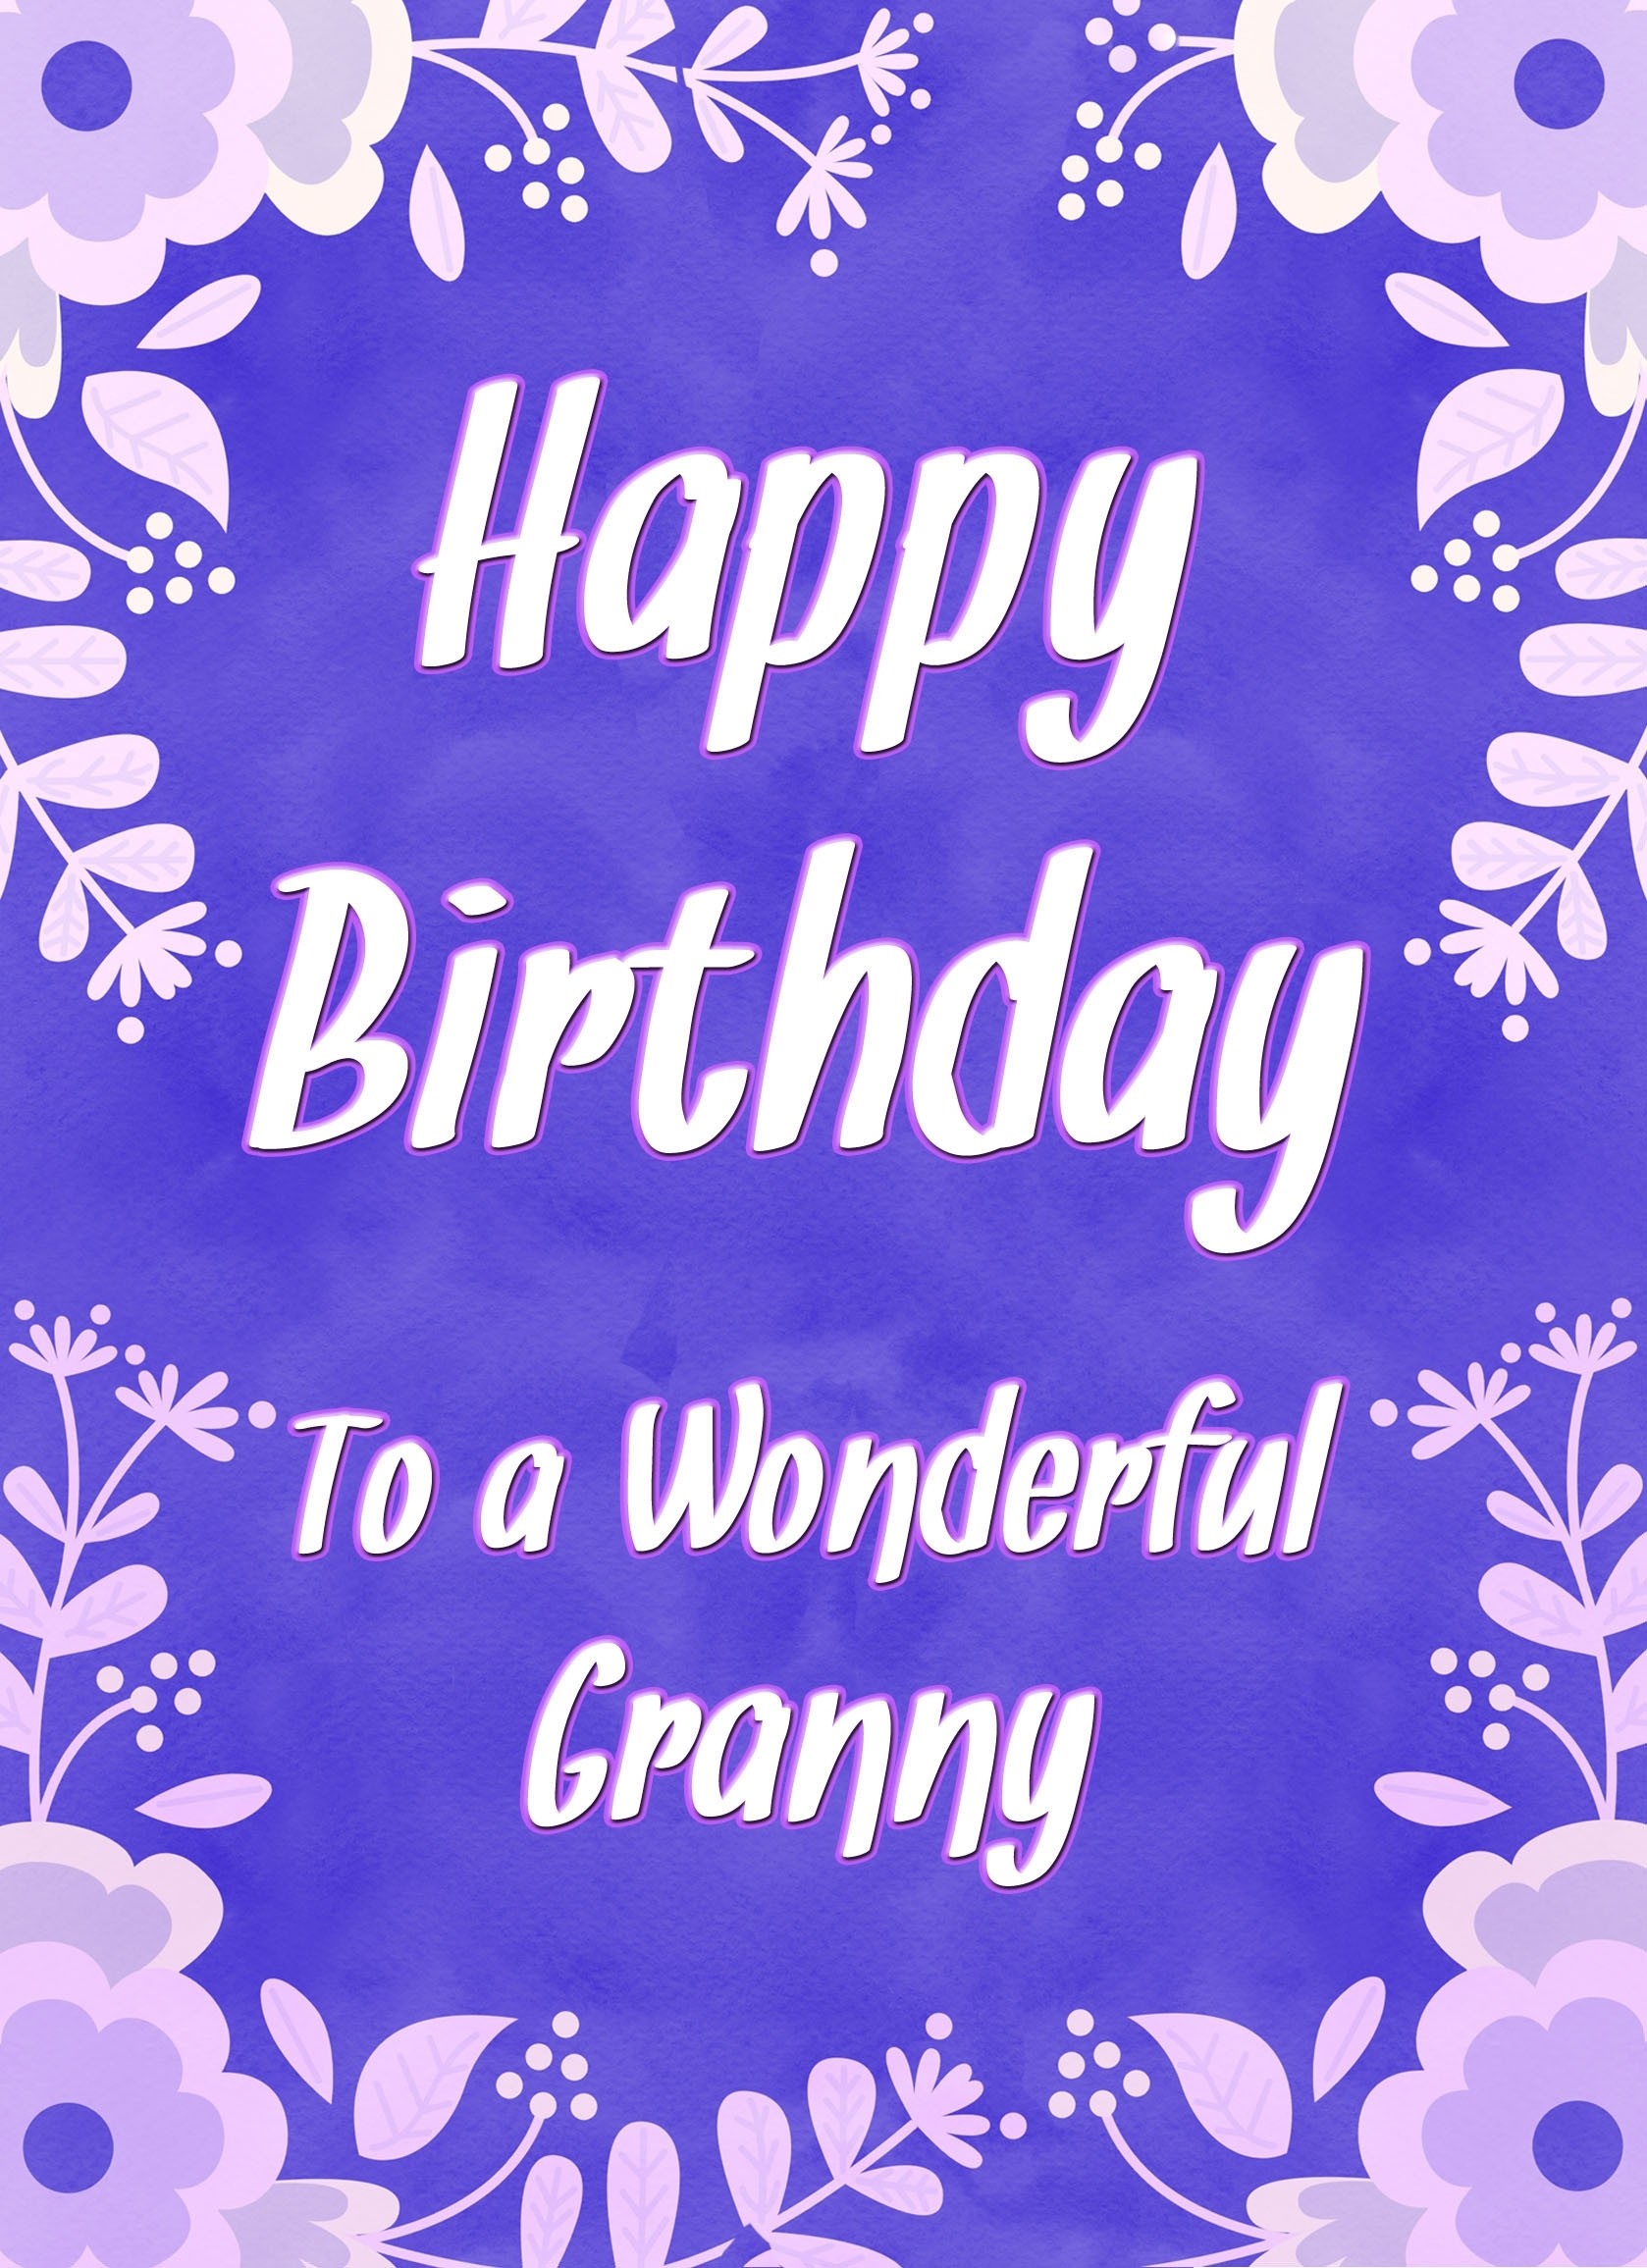 Birthday Card For Wonderful Granny (Purple Border)